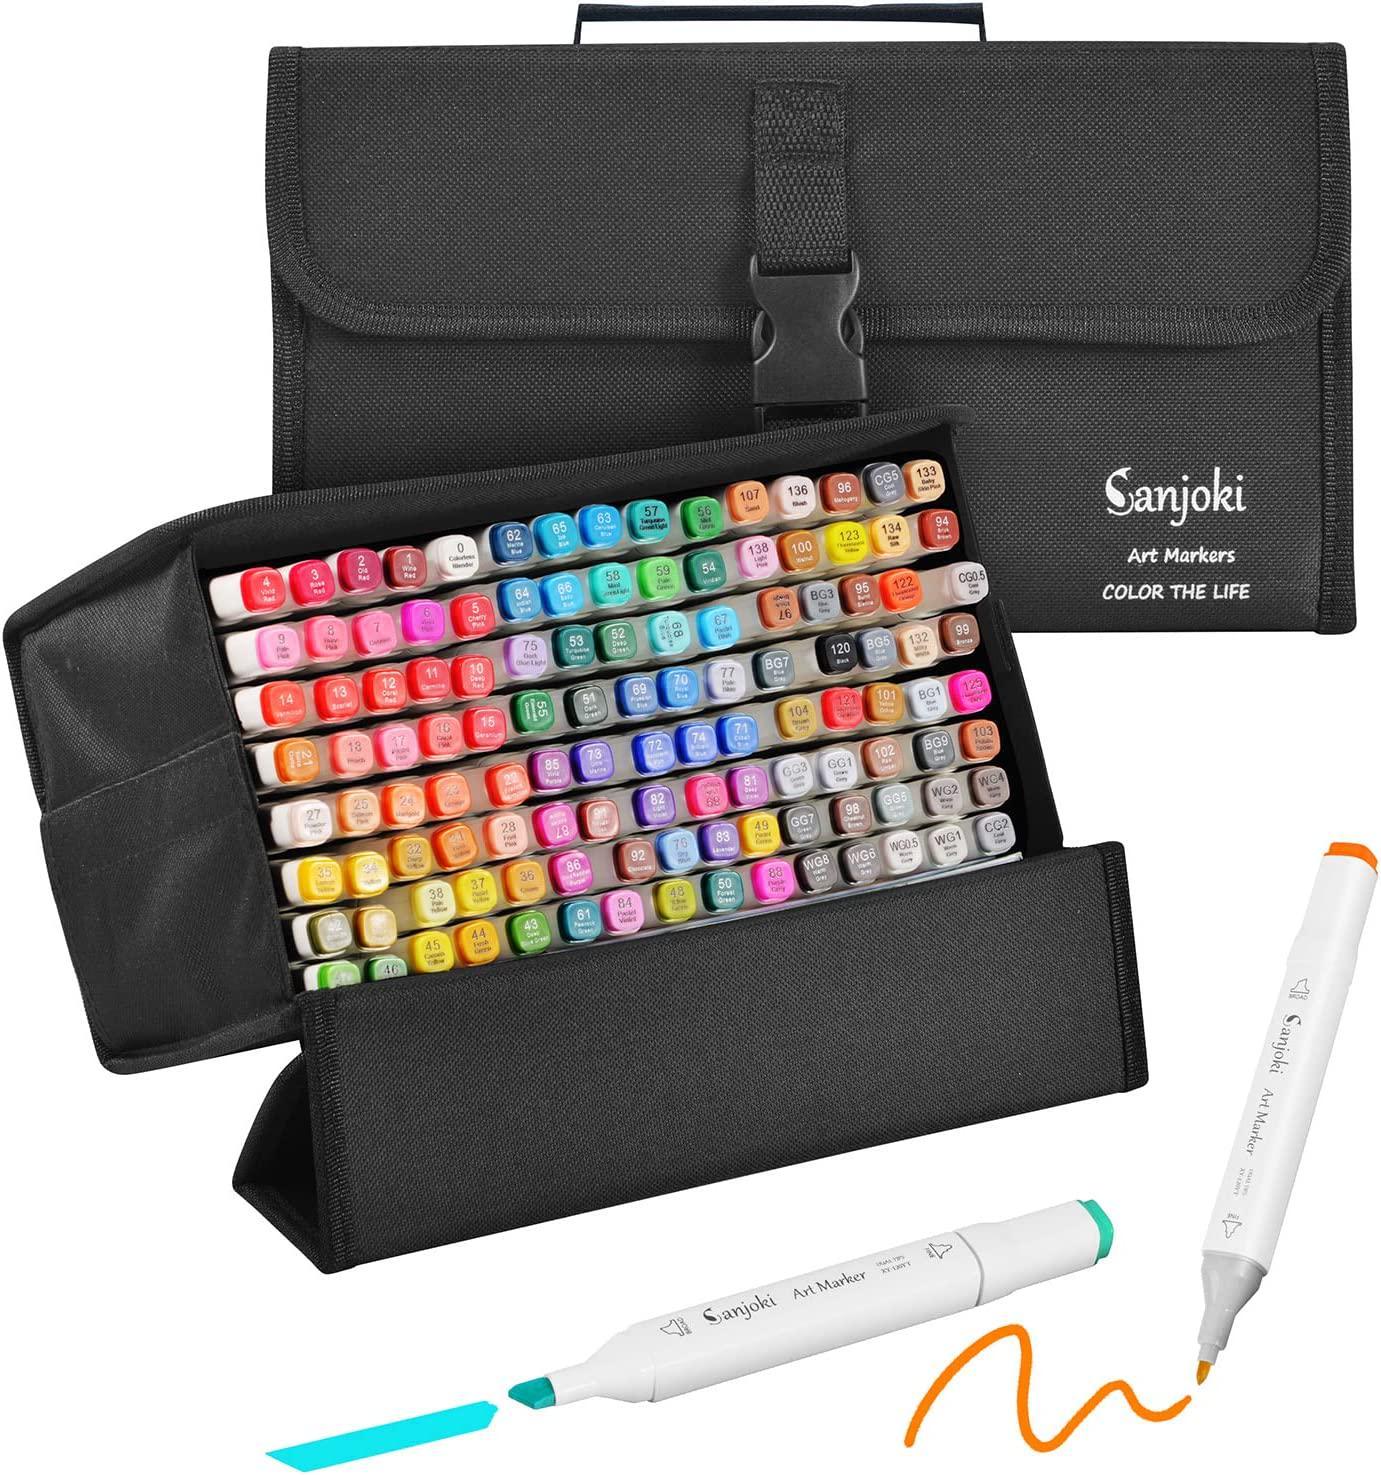 60/80 Colors Art Markers ZSCM Brush Pen Sketch Alcohol Based